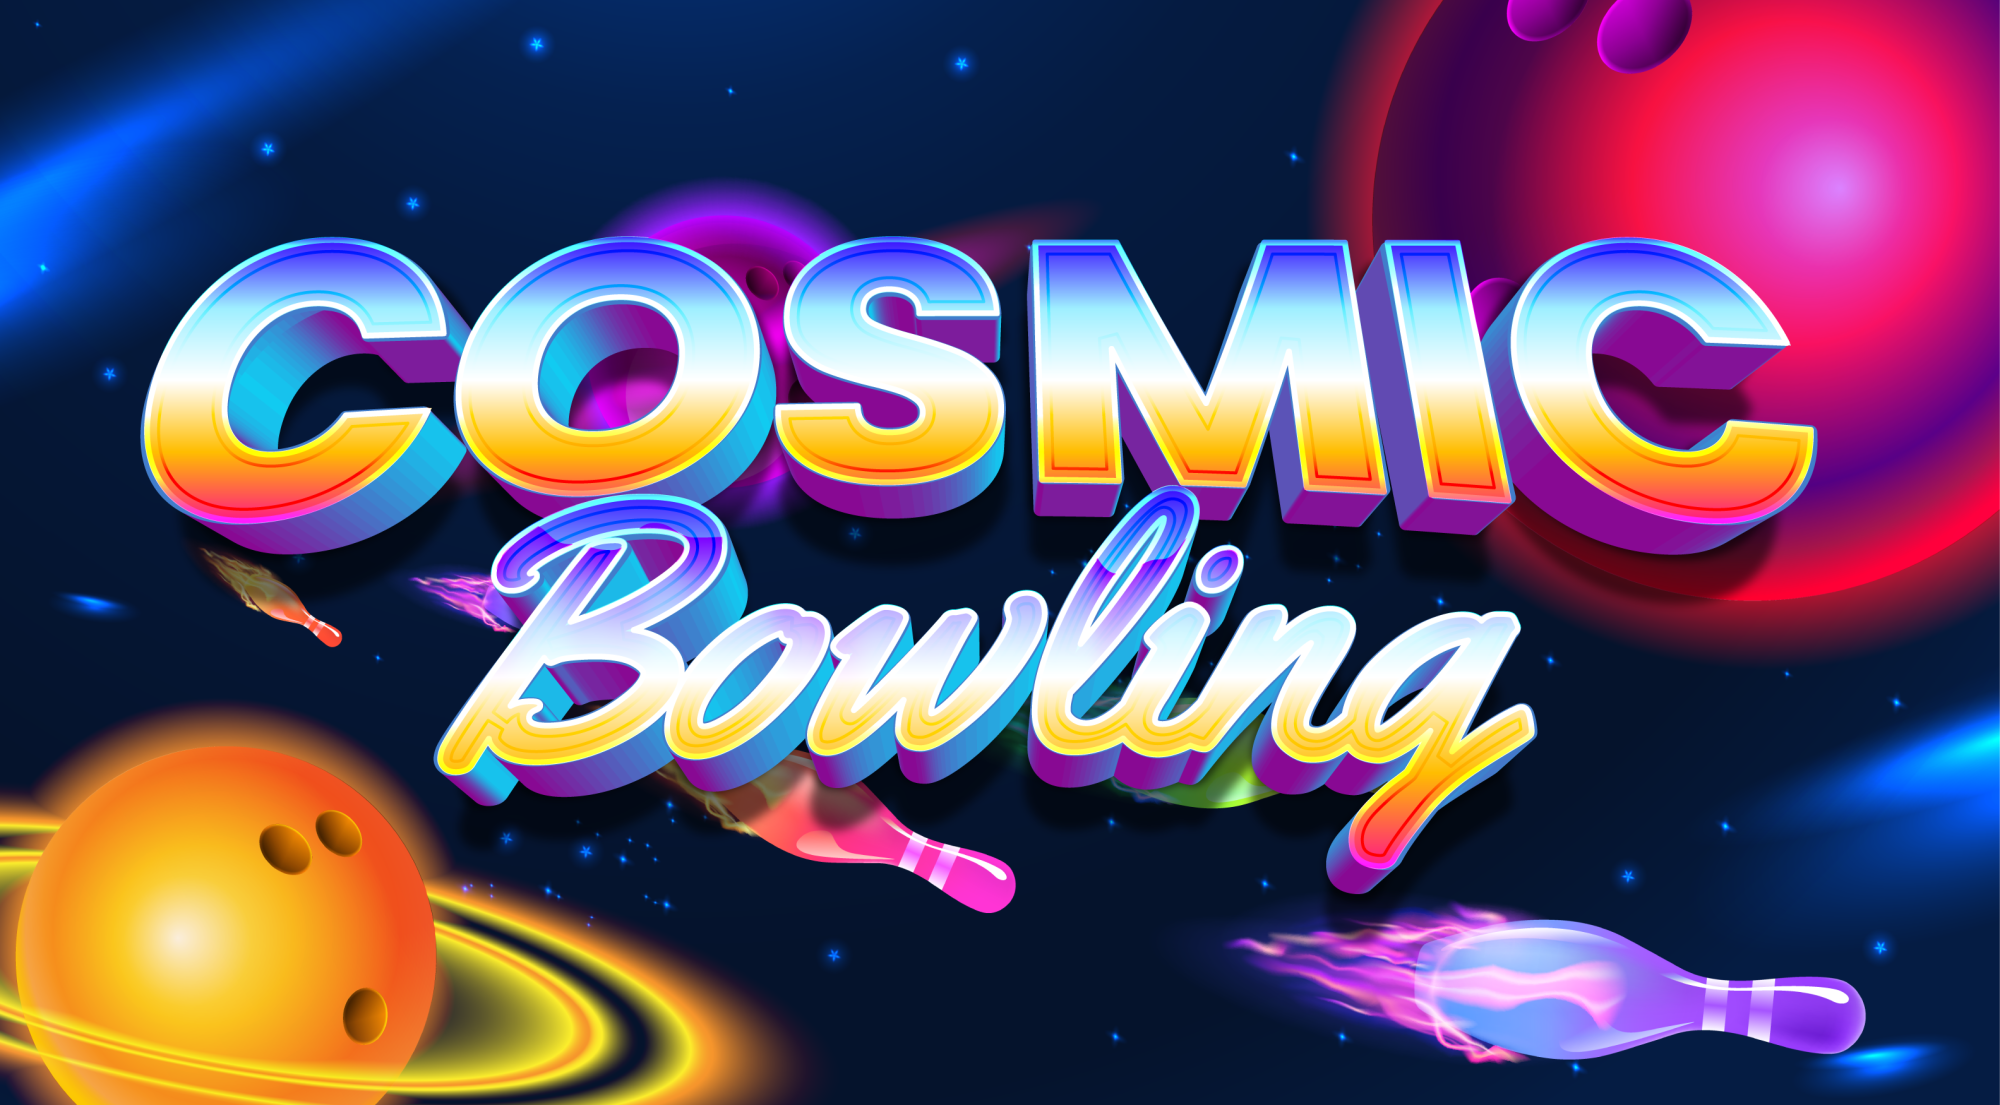 Cosmic Bowling Ft Johnson Us Army Mwr